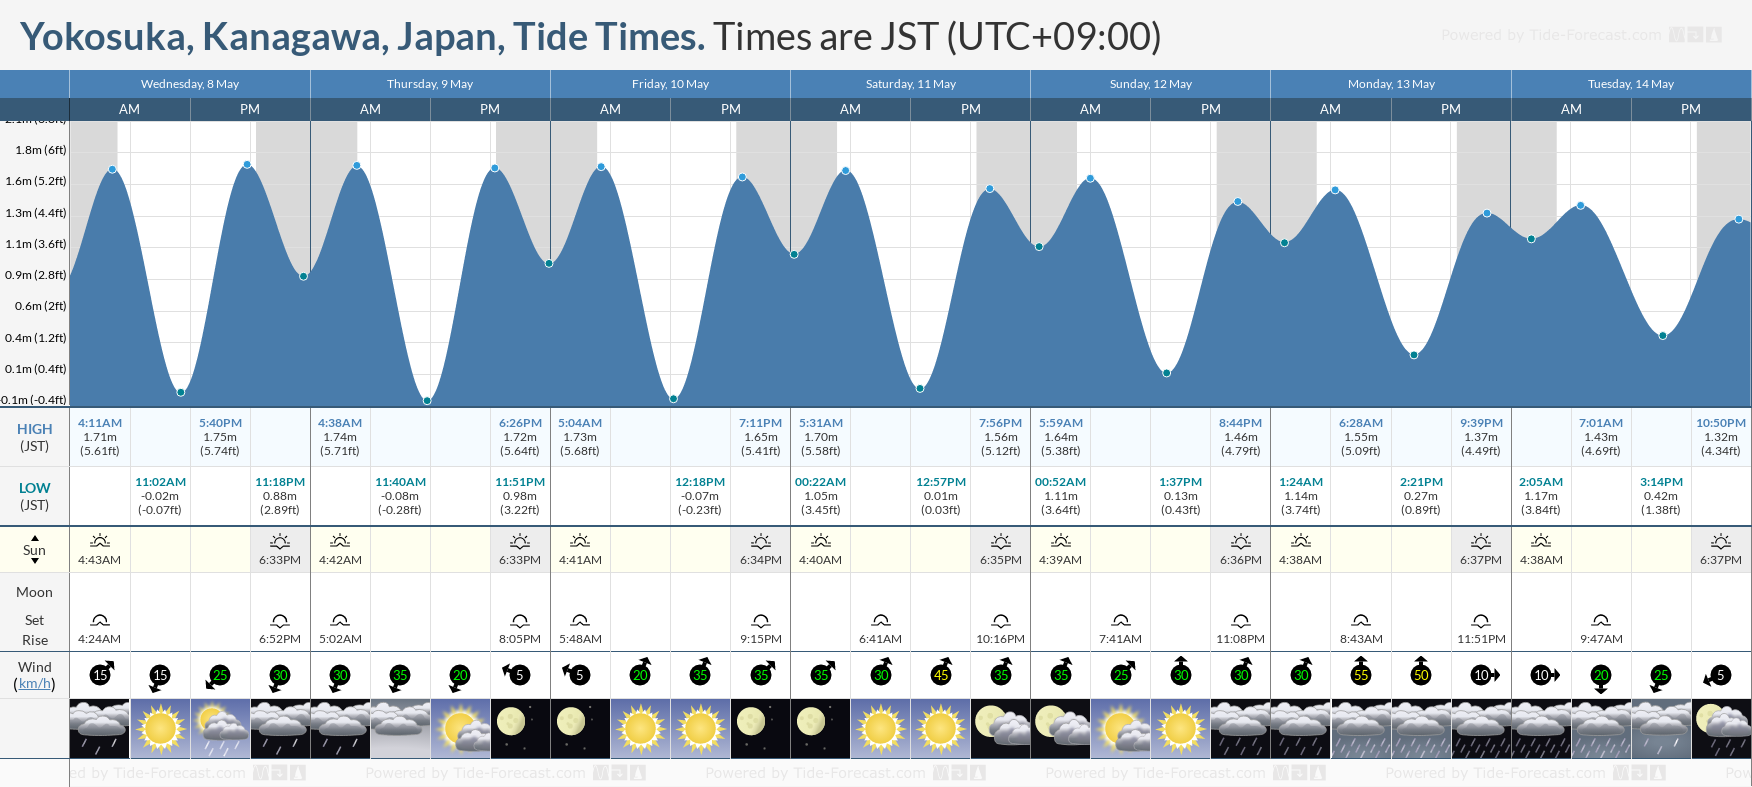 Yokosuka, Kanagawa, Japan Tide Chart including high and low tide tide times for the next 7 days